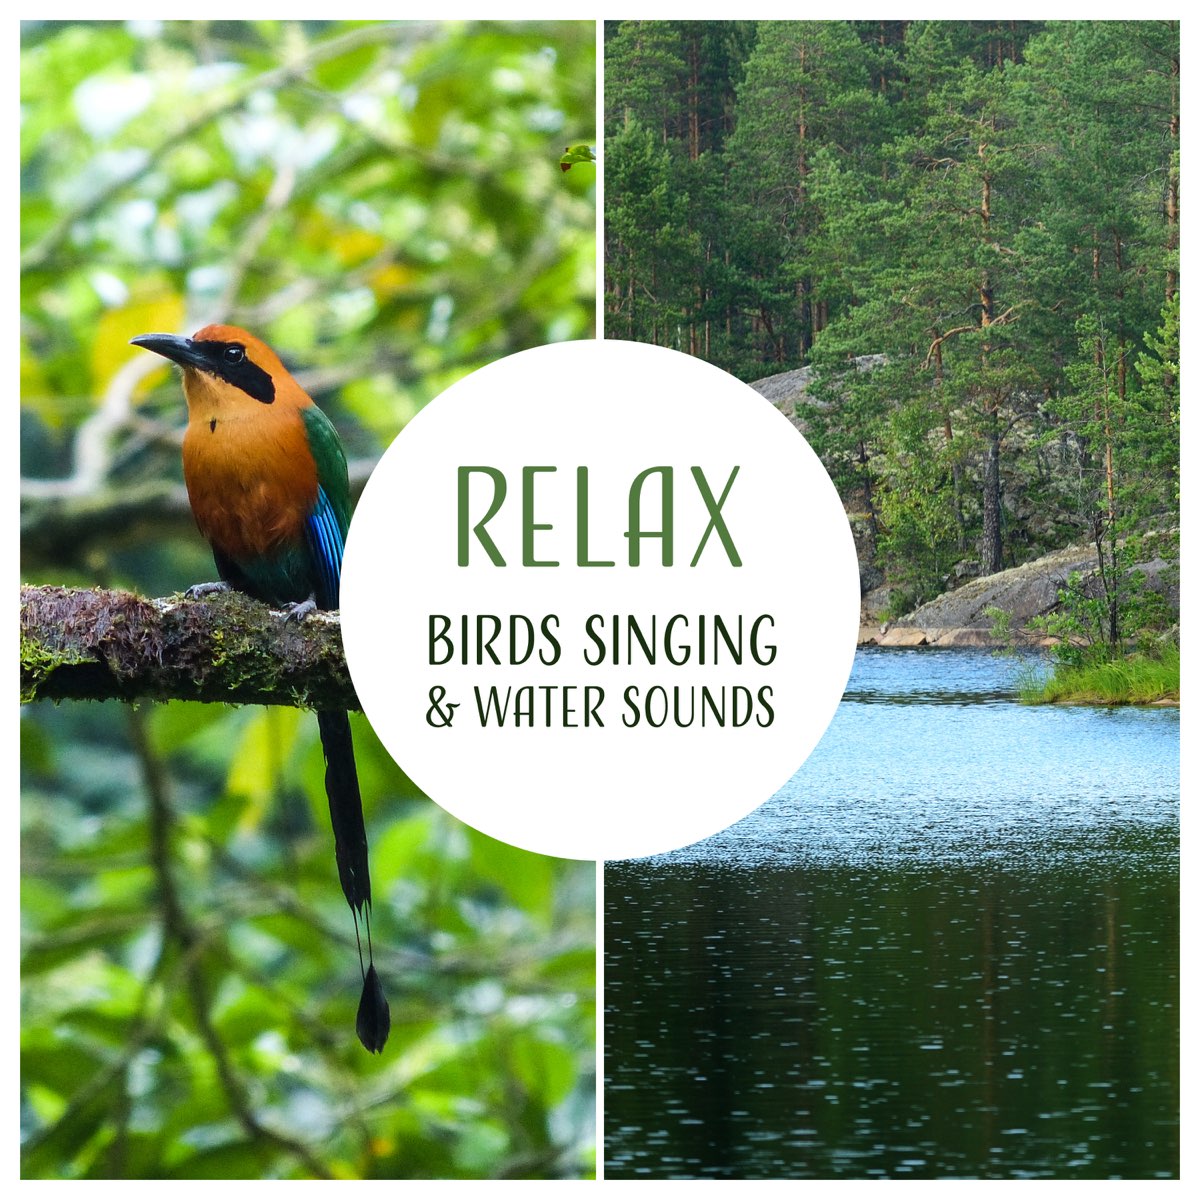 Слушать музыку птицы релакс. Singing Birds Sound. Listen to Birds singing. Singing Birds пиво. Relaxing Forest Sounds - Birds singing and Wind Sounds in leaves.